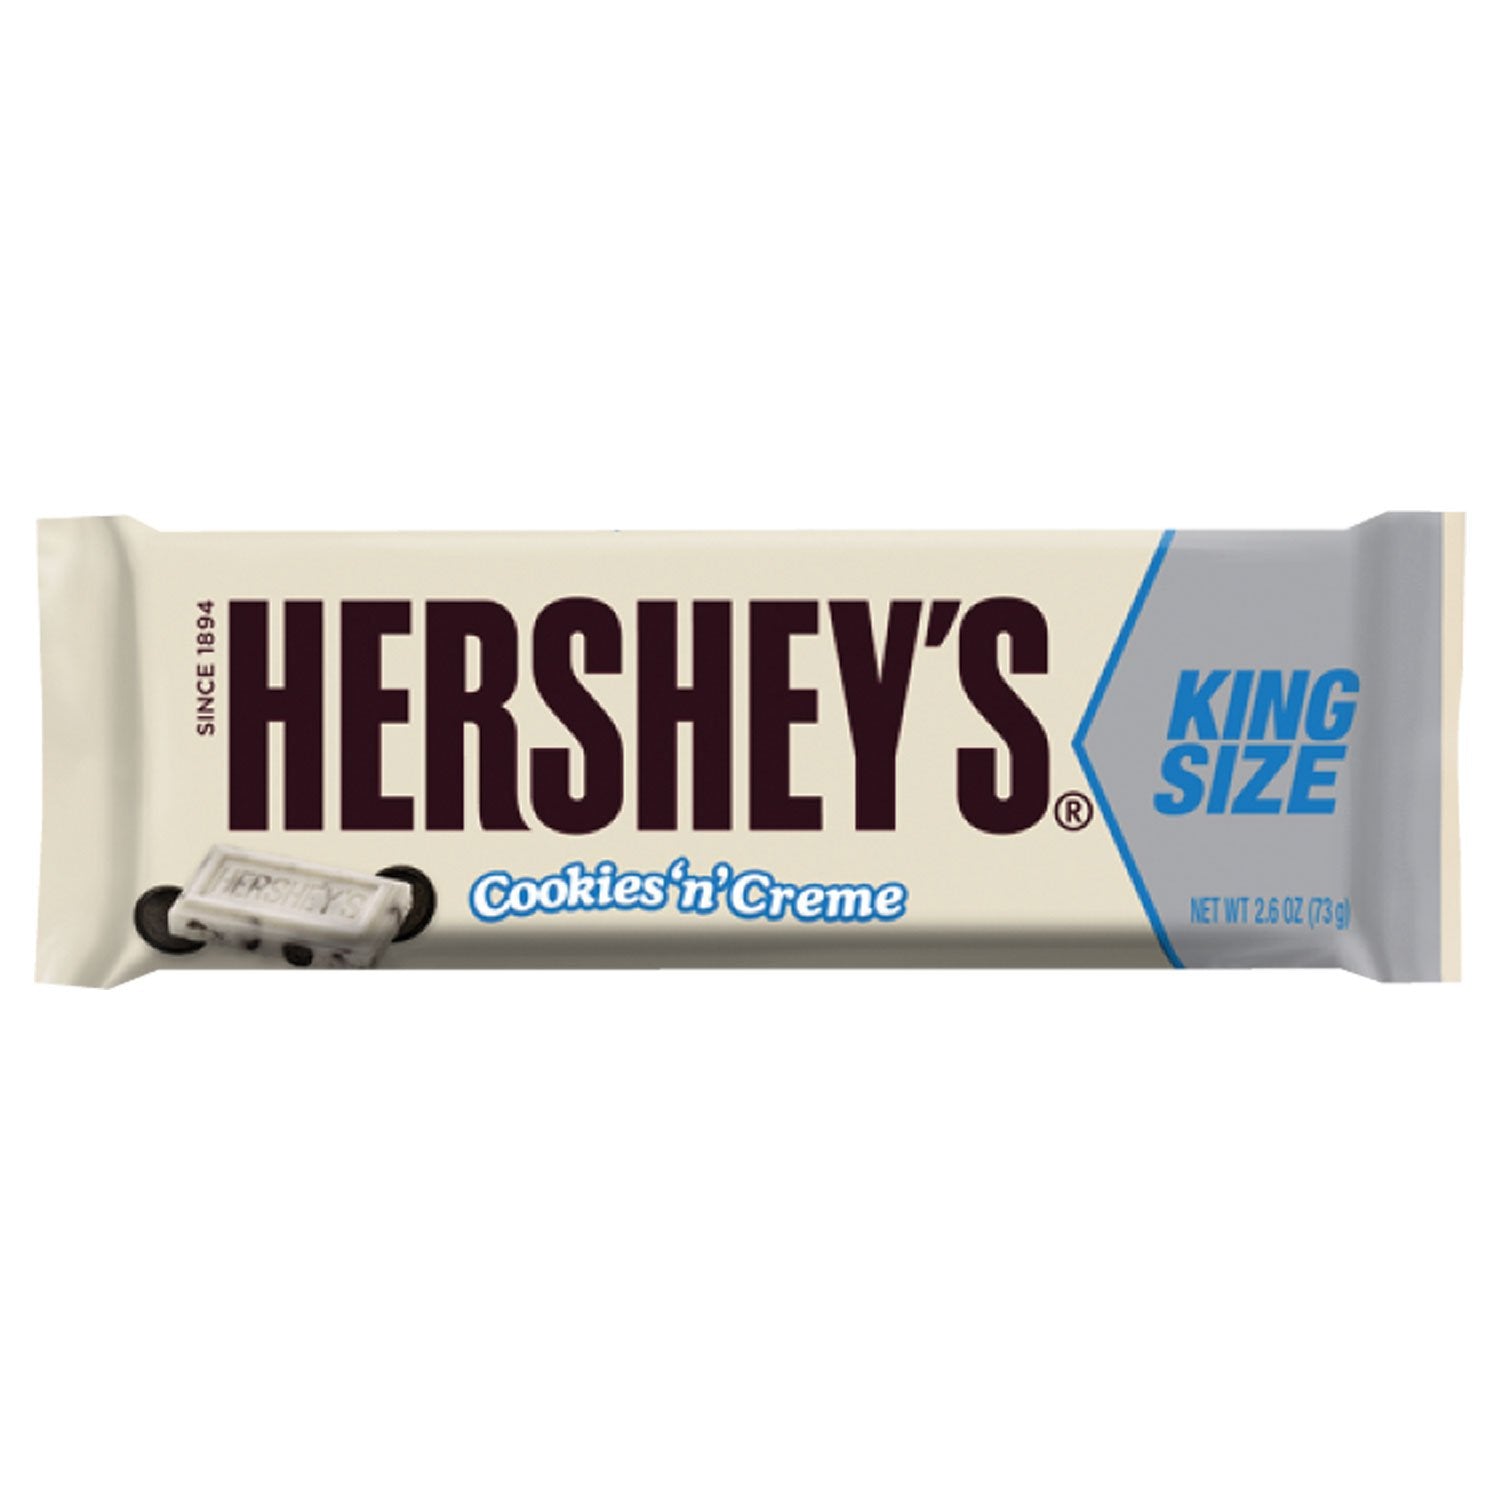 Hershey's Cookies 'n' Creme King Size 2.6 Oz Bar